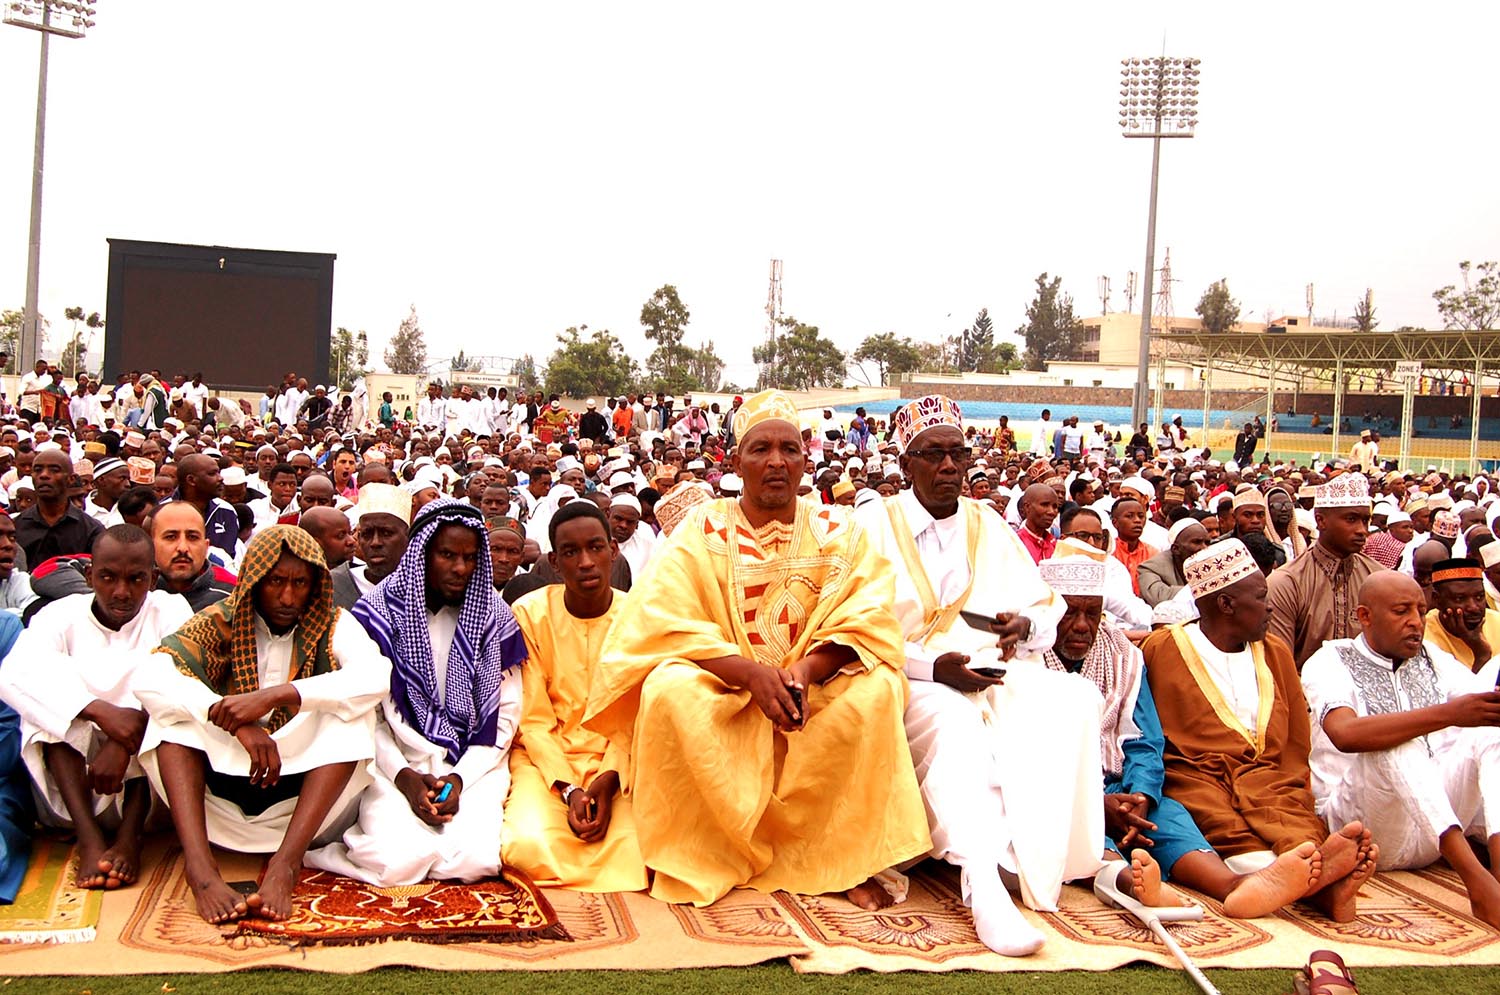 Muslim faithfuls follow a speech by the Mufti of Rwanda, Sheikh Salim Hitimana, at Kigali Stadium yesterday. Photos by Frederic Byumvuhore